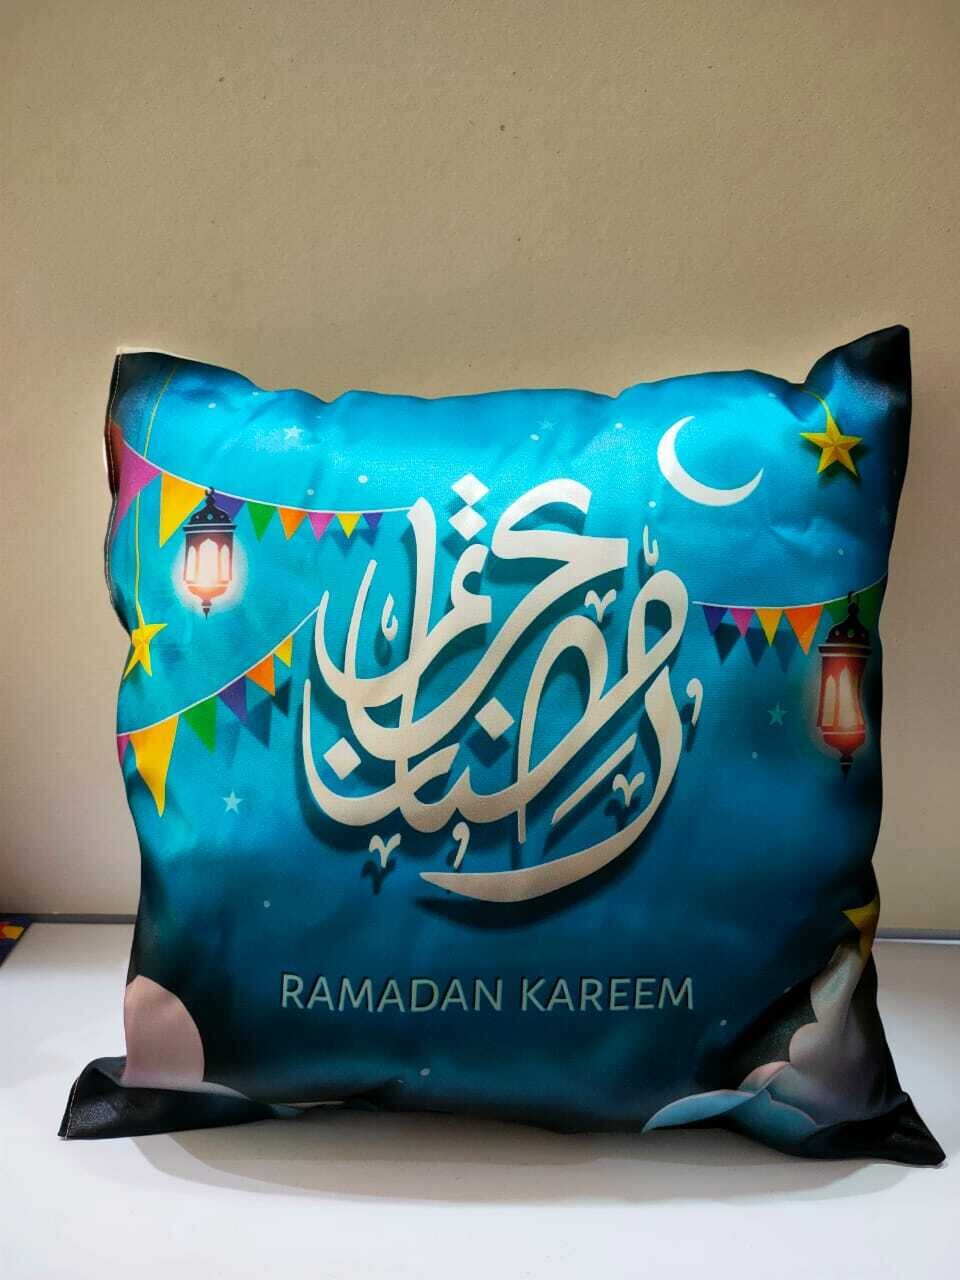 Ramadan small pillow